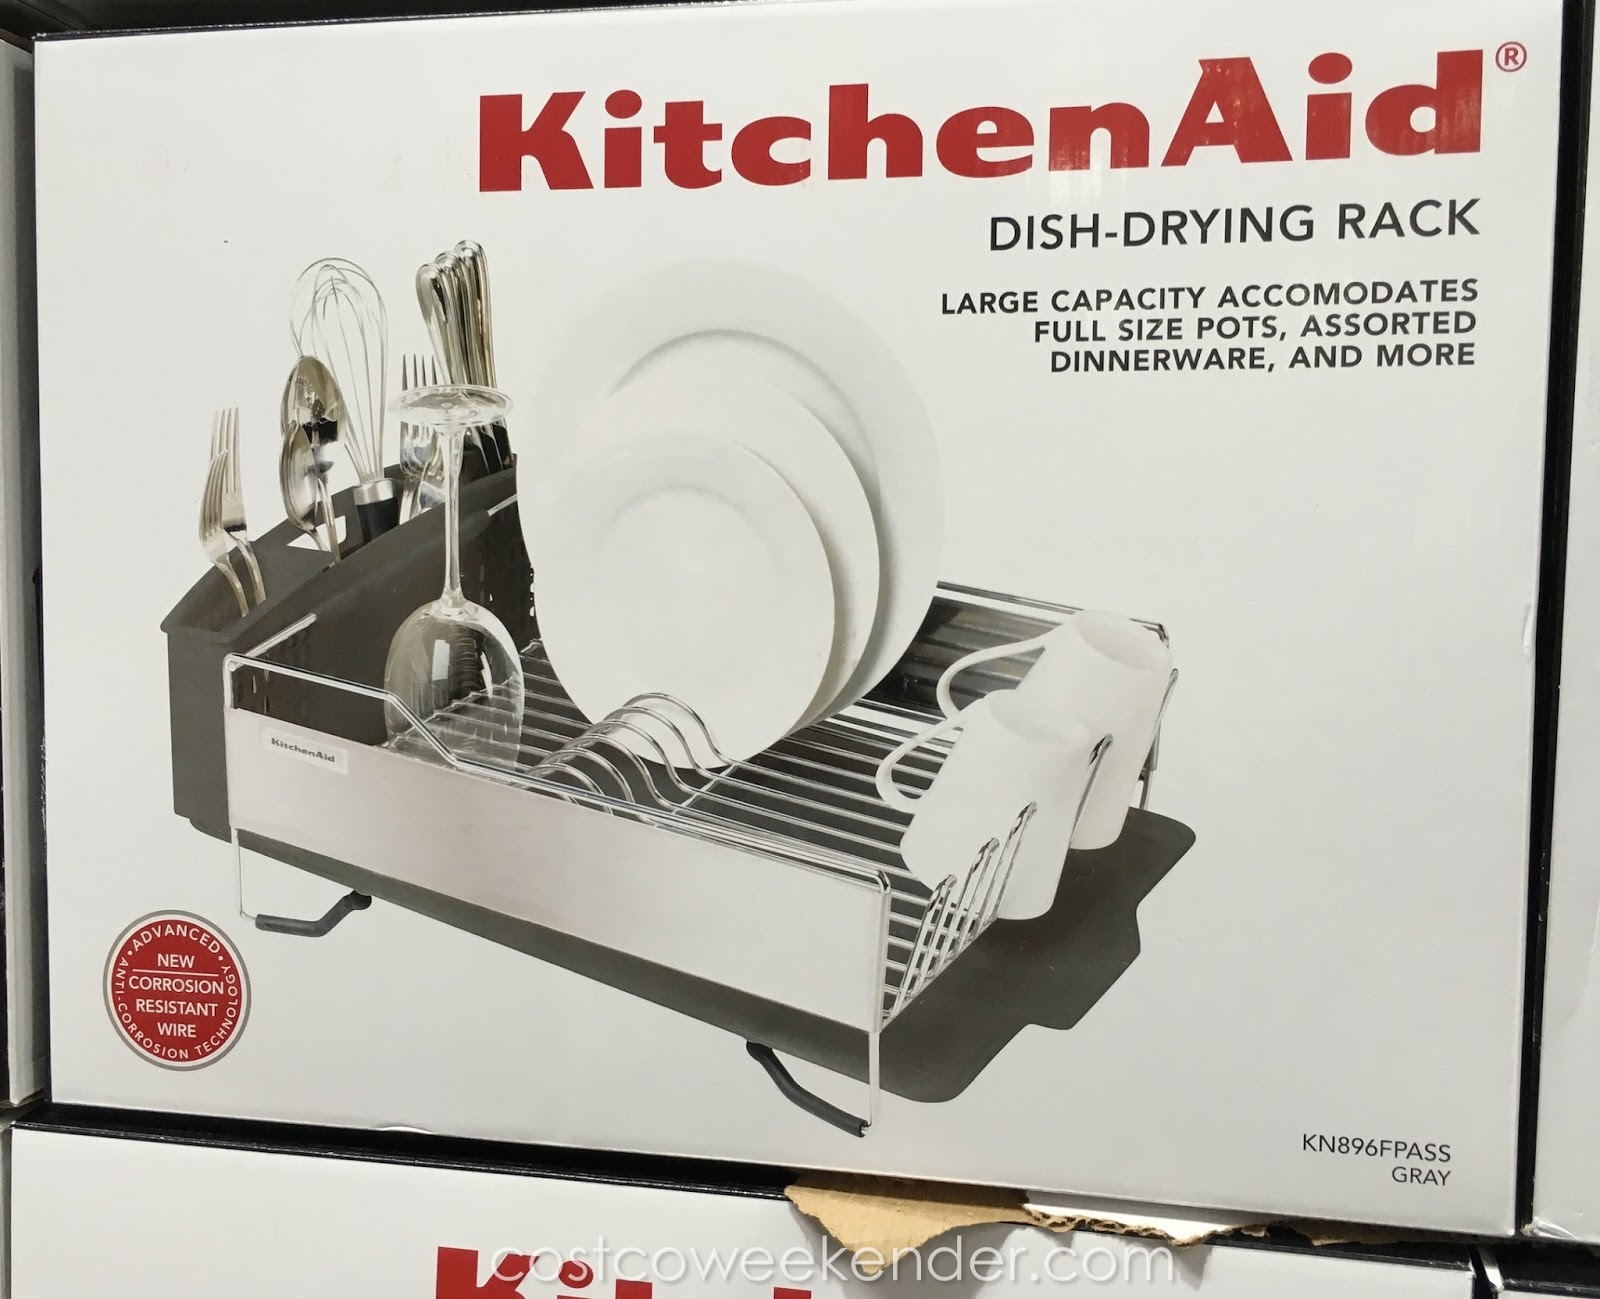 KitchenAid Large Capacity Dish-Drying Rack 